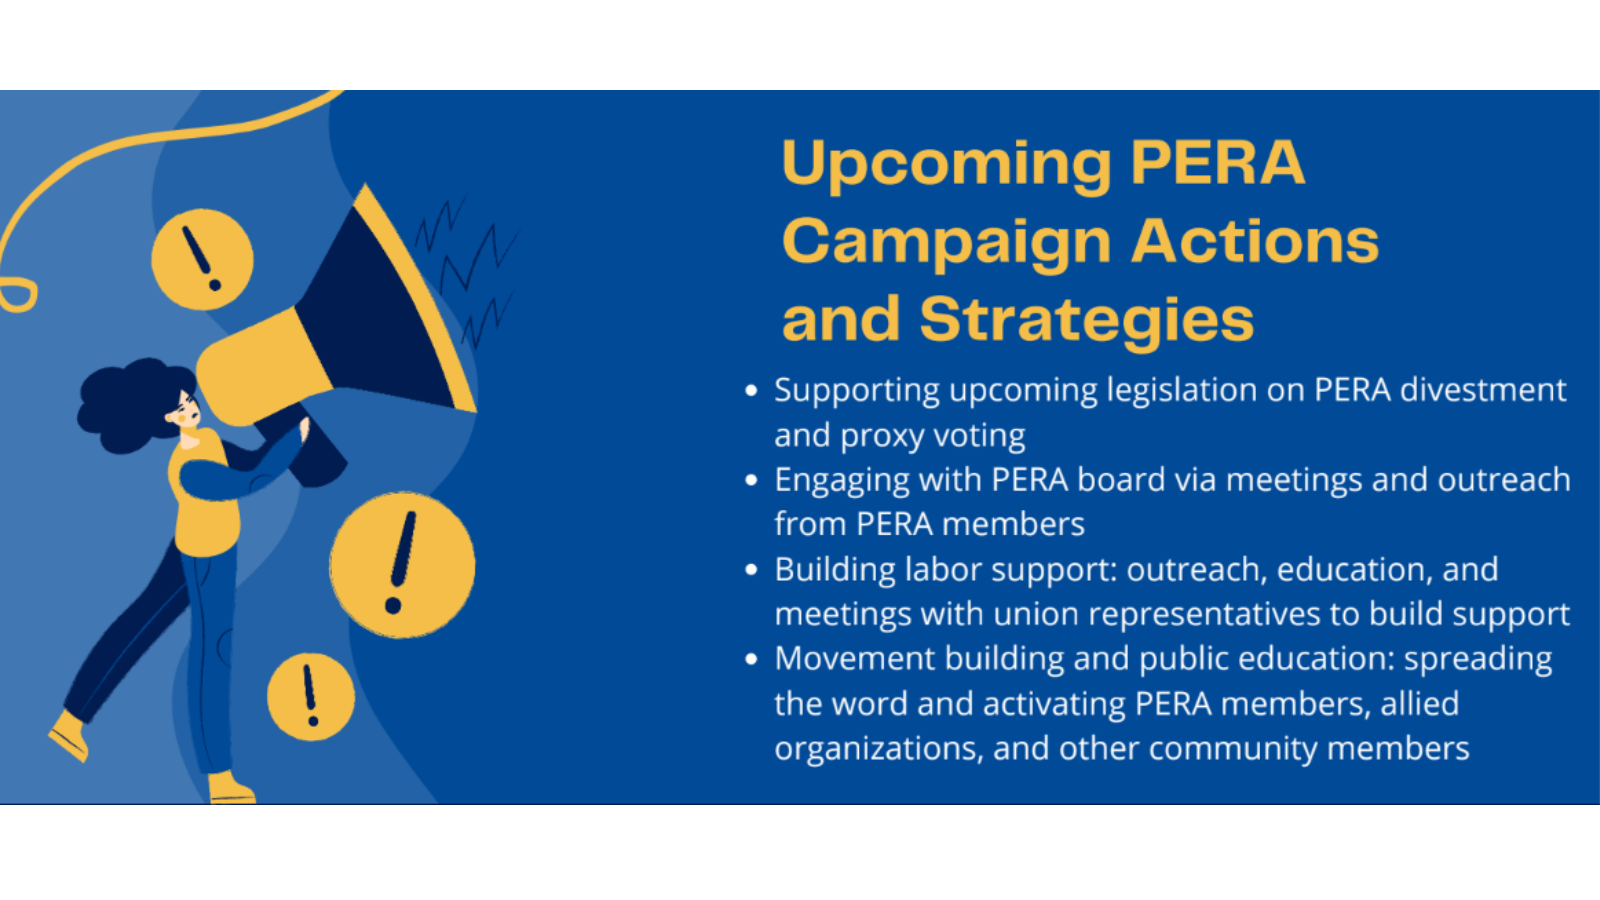 Upcoming PERA campaign actions and strategies